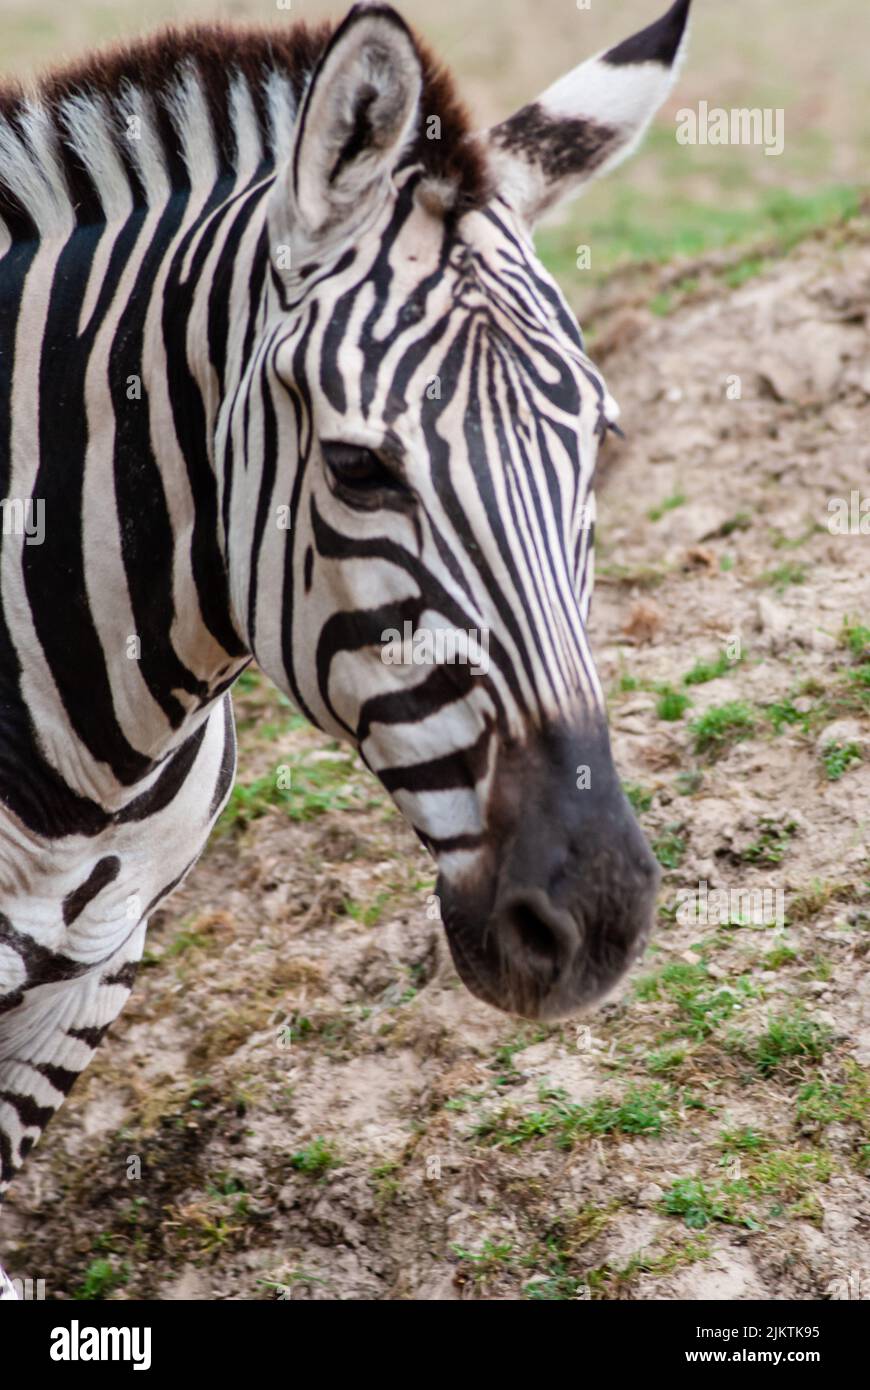 A vertical closeup of a zebra's face Stock Photo